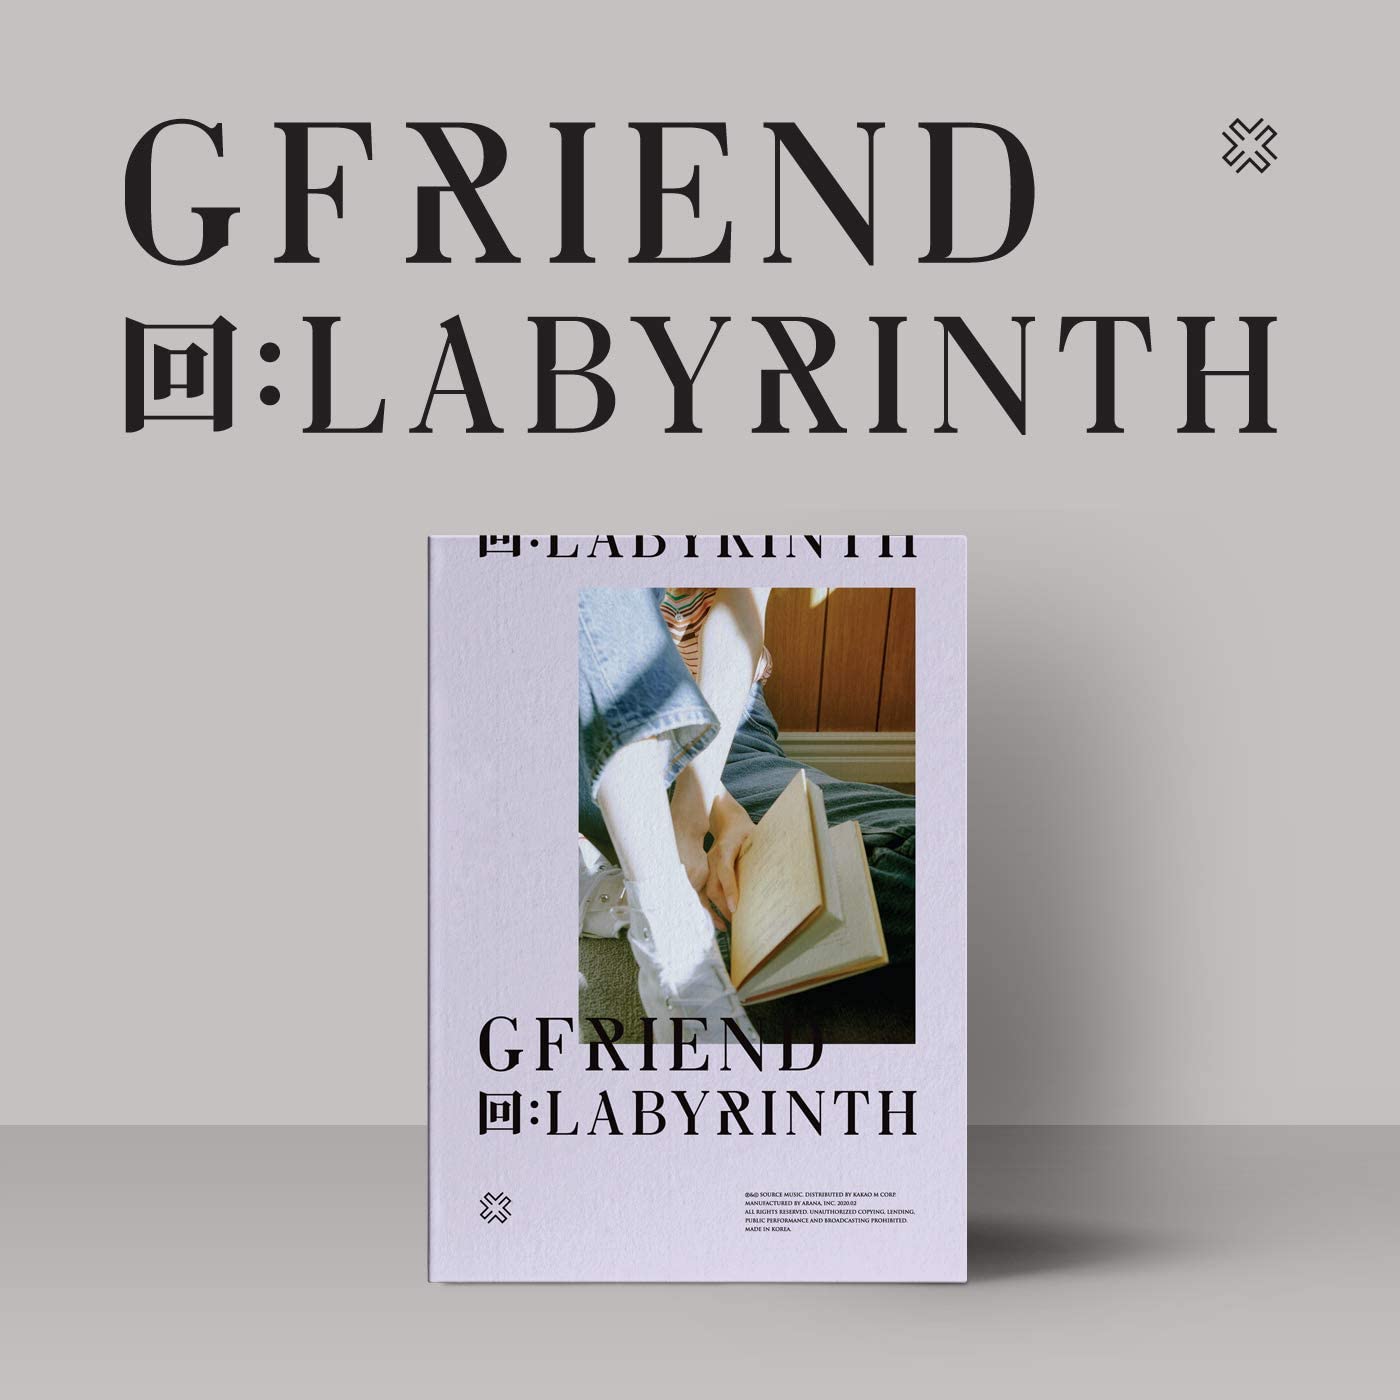 GFRIEND - LABYRINTH (Random Version)